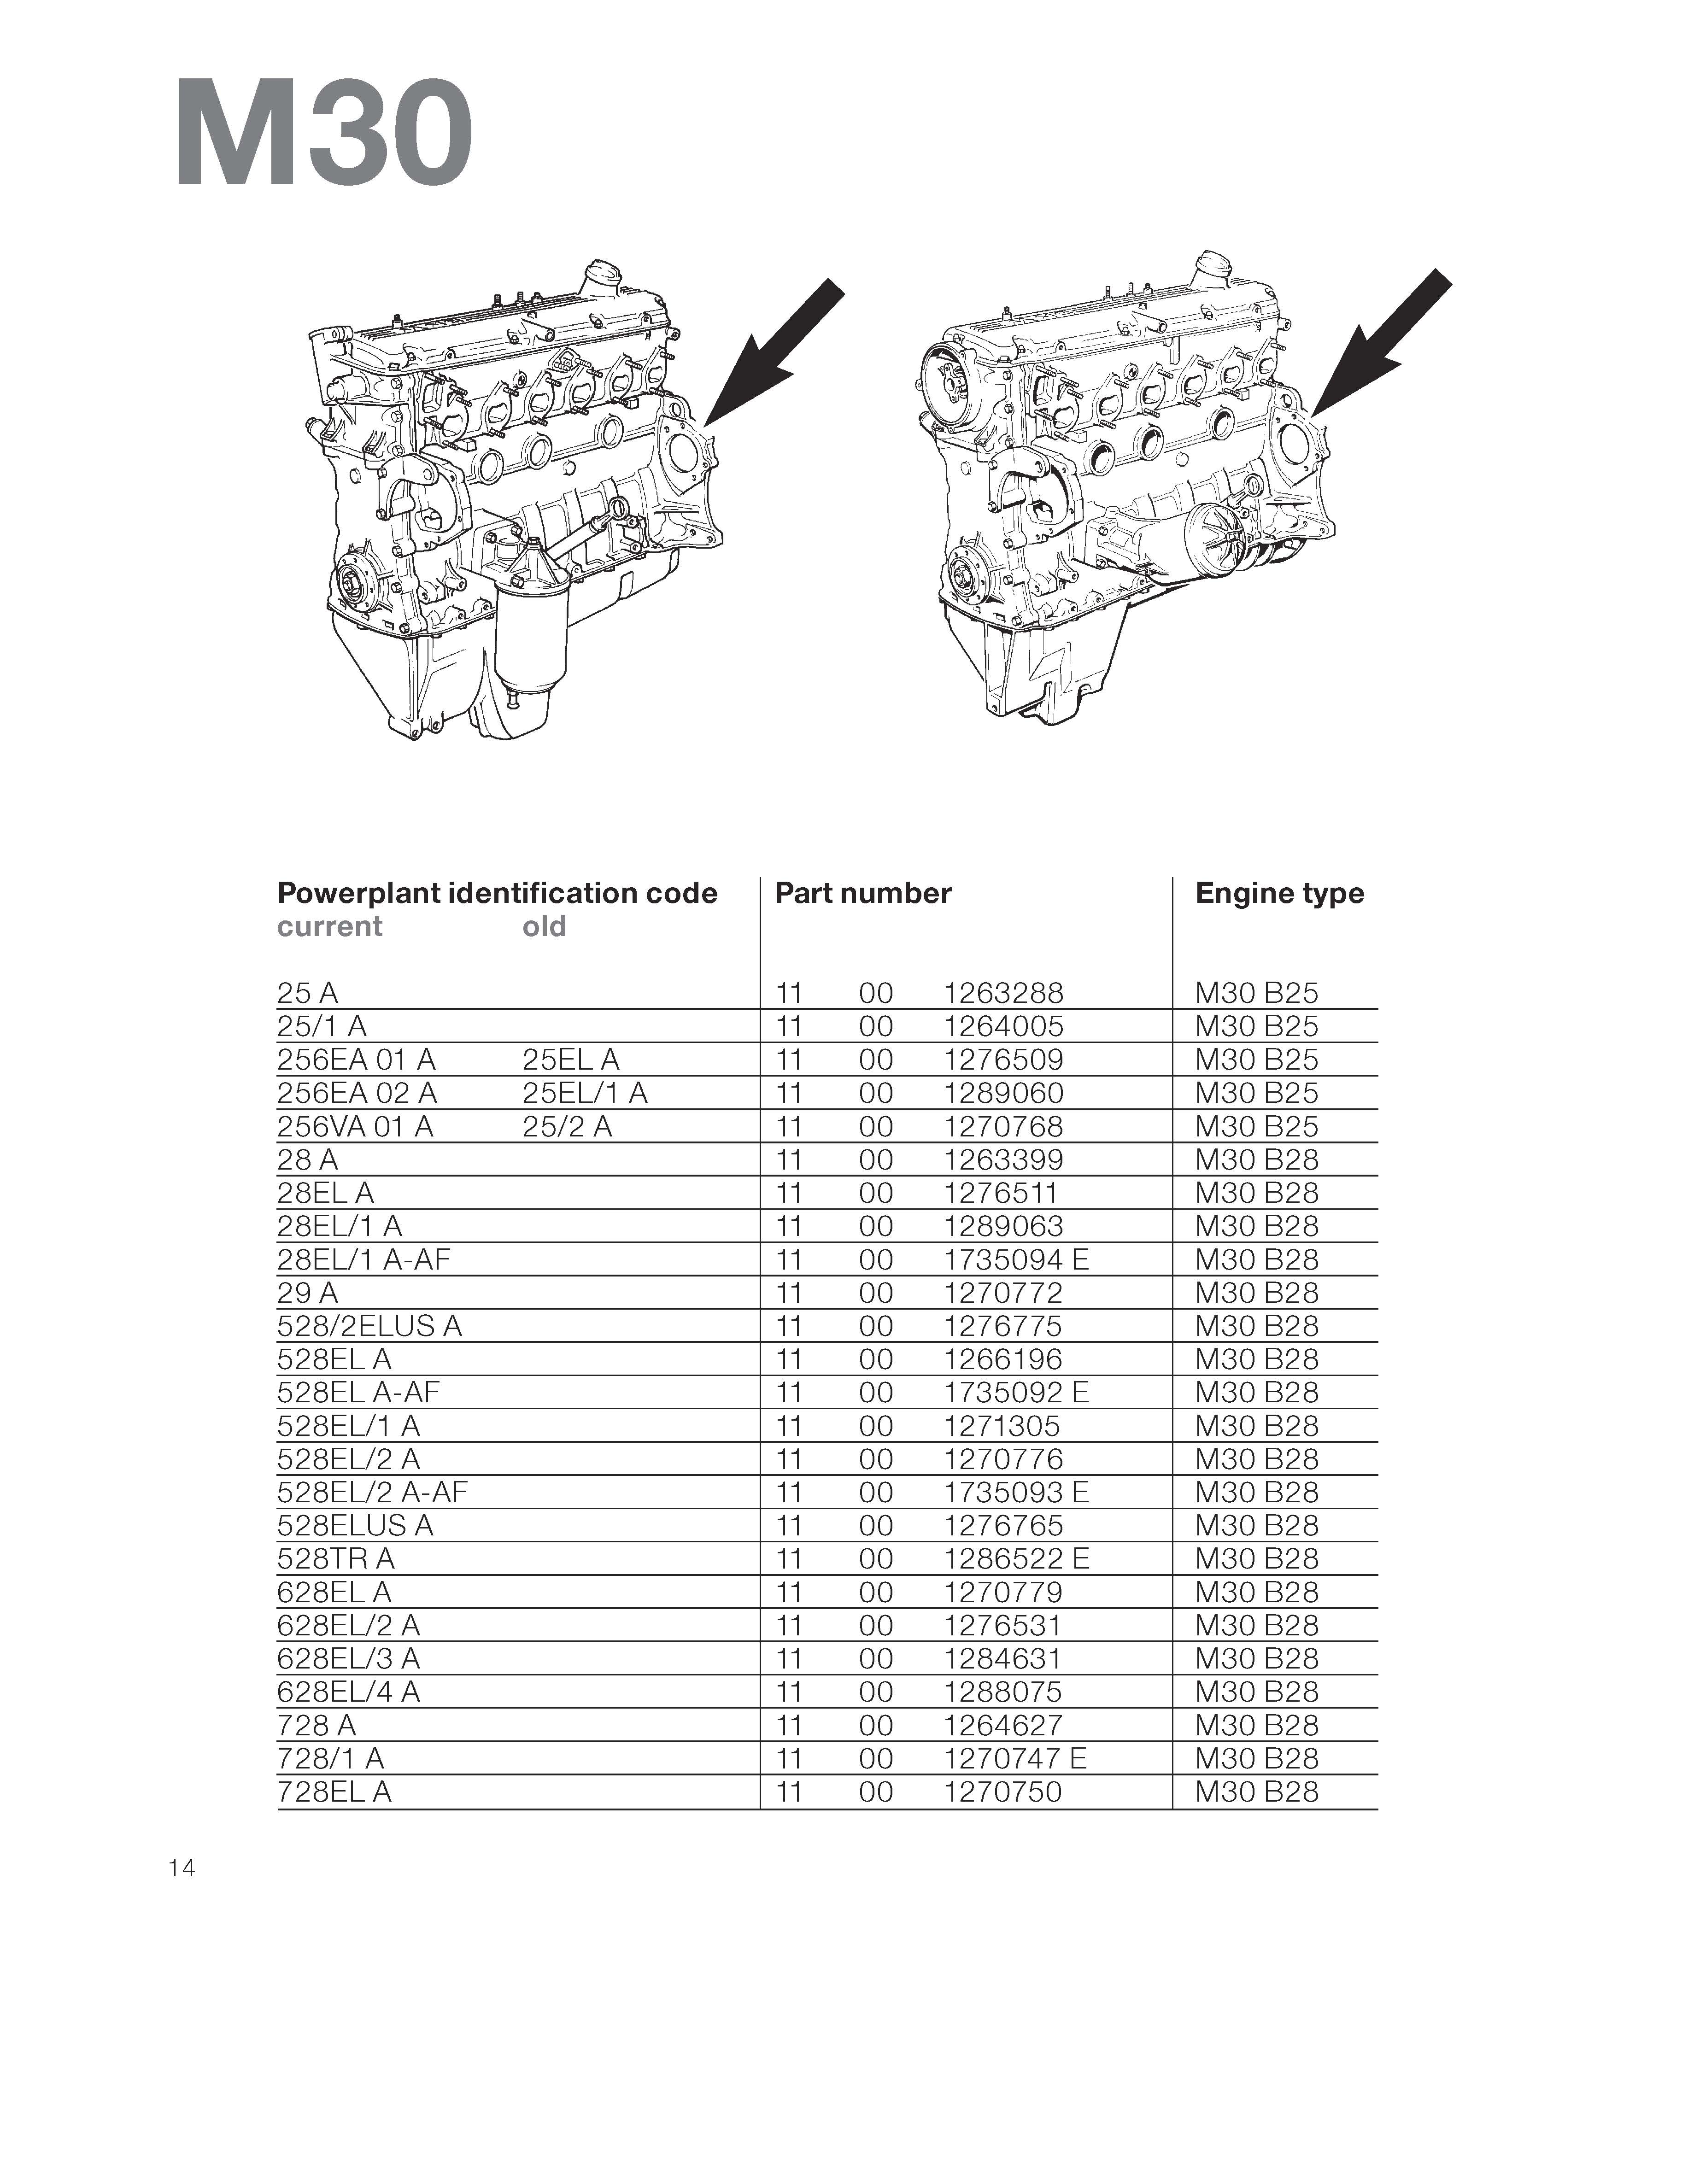 BMW M30 Engine Identification 3pp_Page_1.jpg